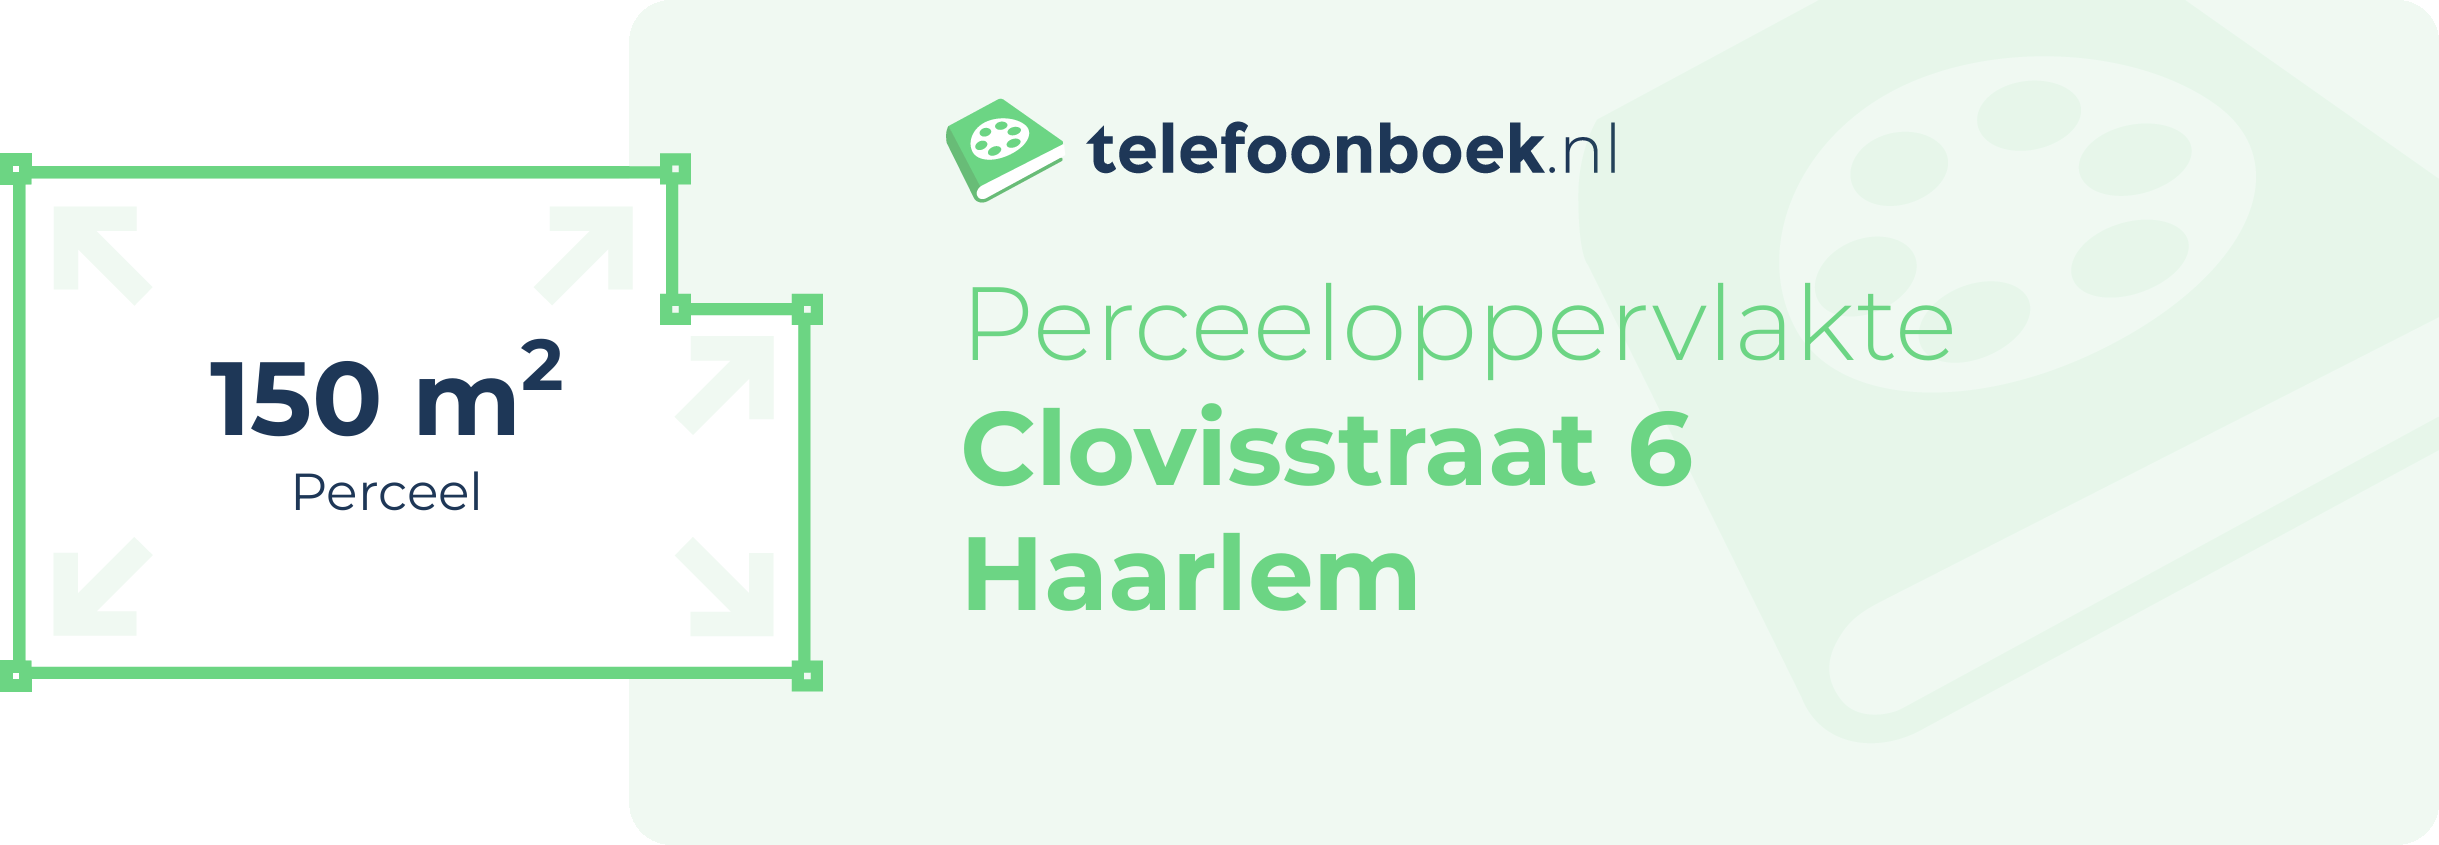 Perceeloppervlakte Clovisstraat 6 Haarlem